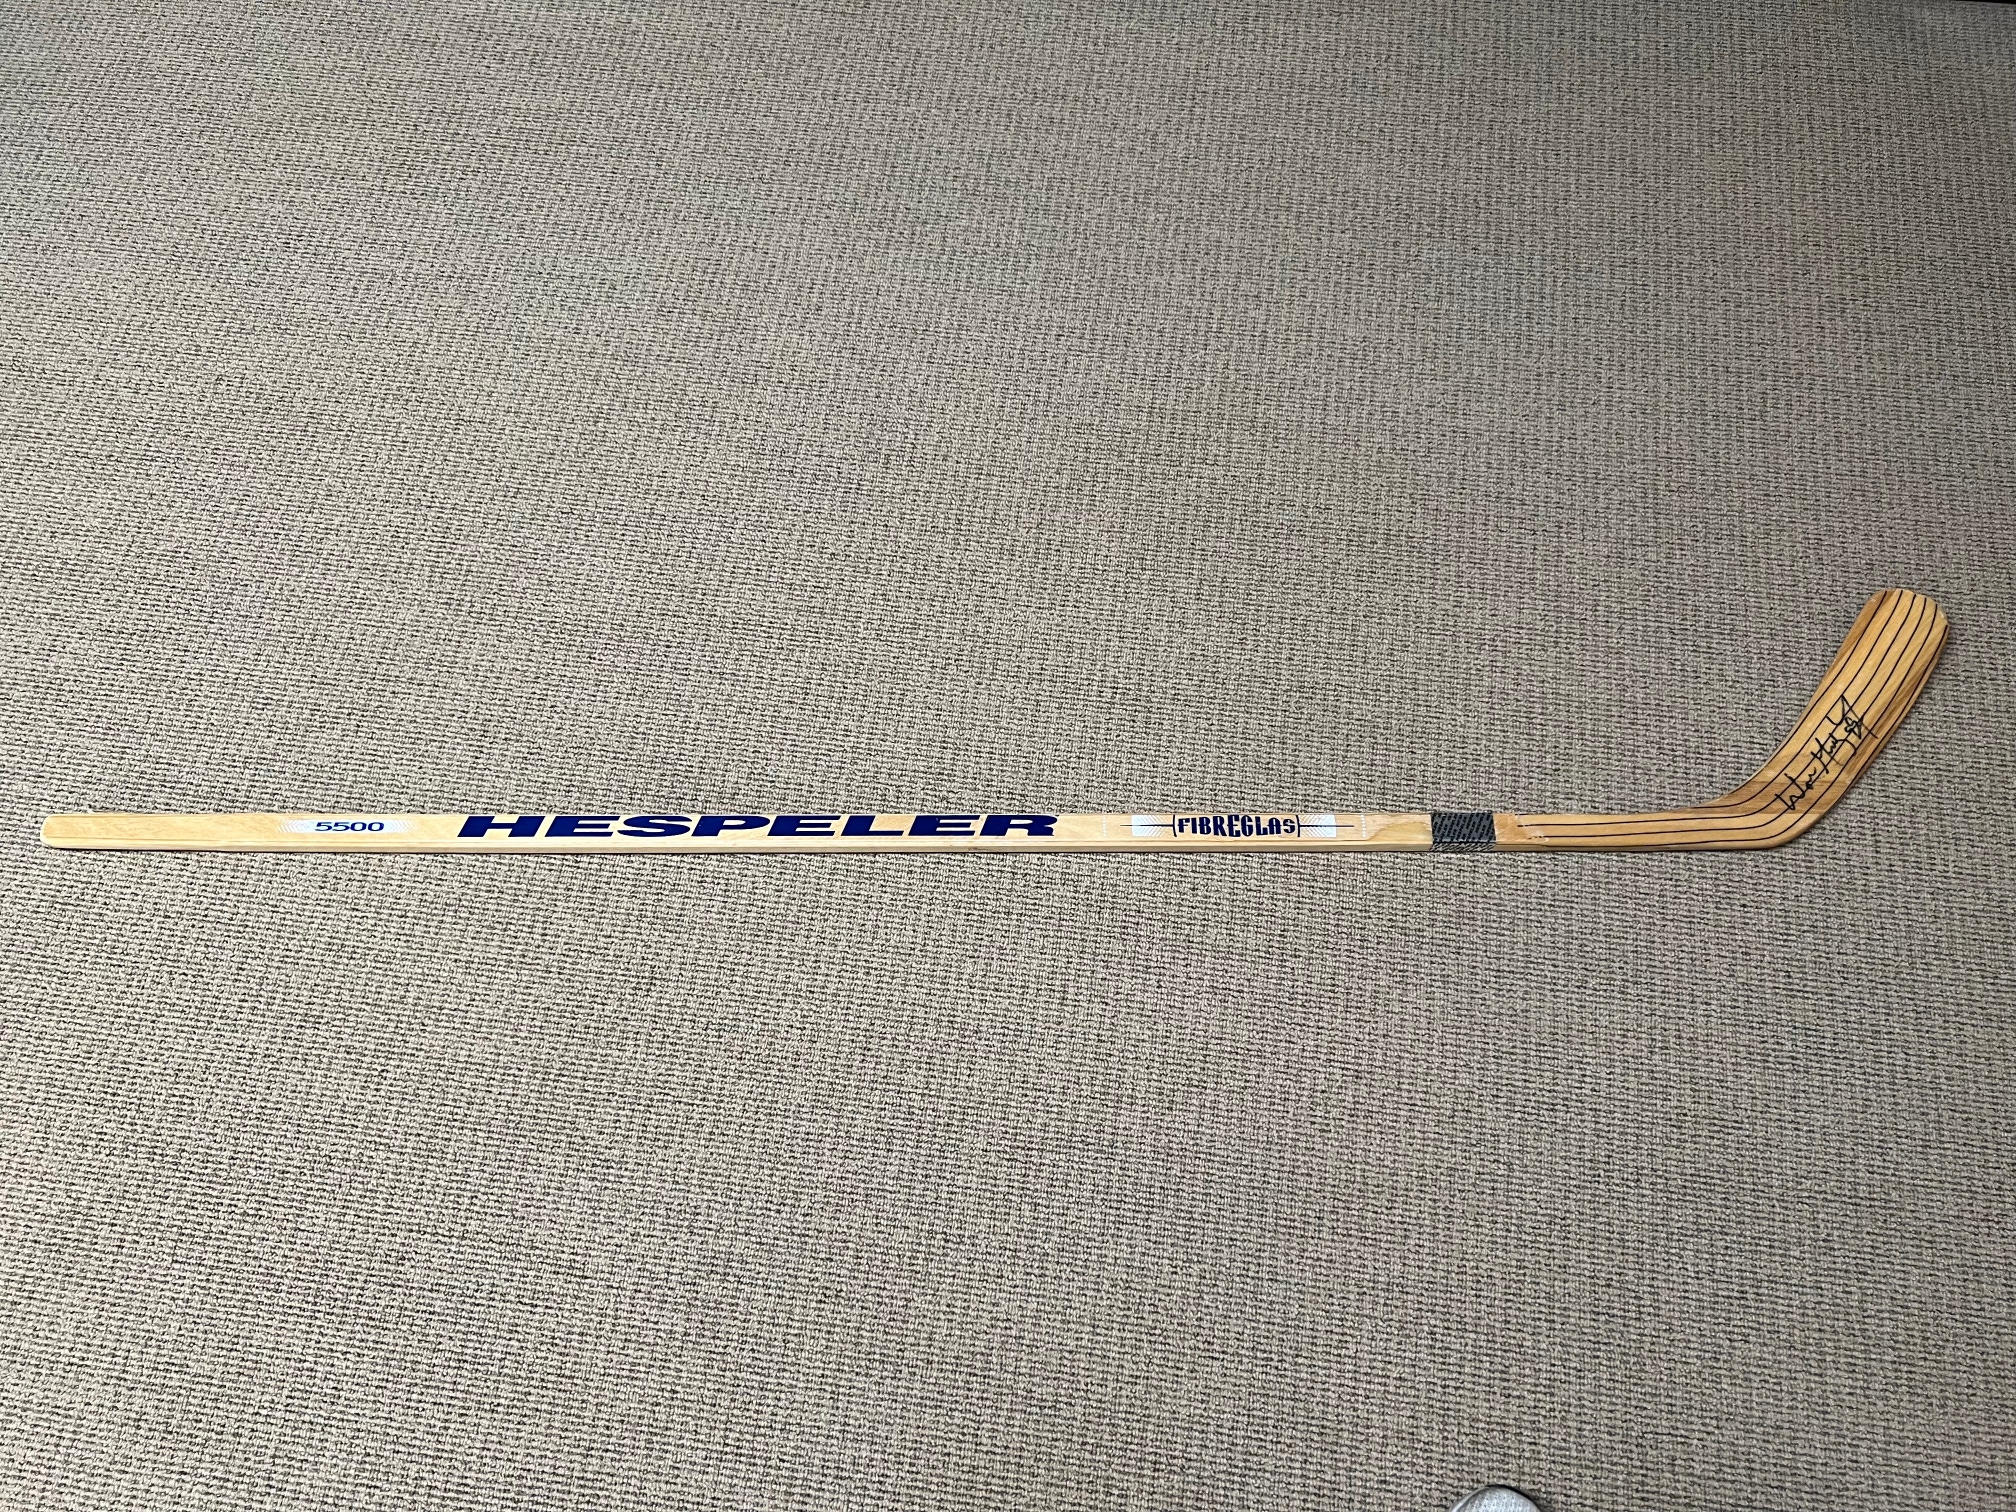 Wayne Gretzky Autographed Hockey Stick - Perfect condition